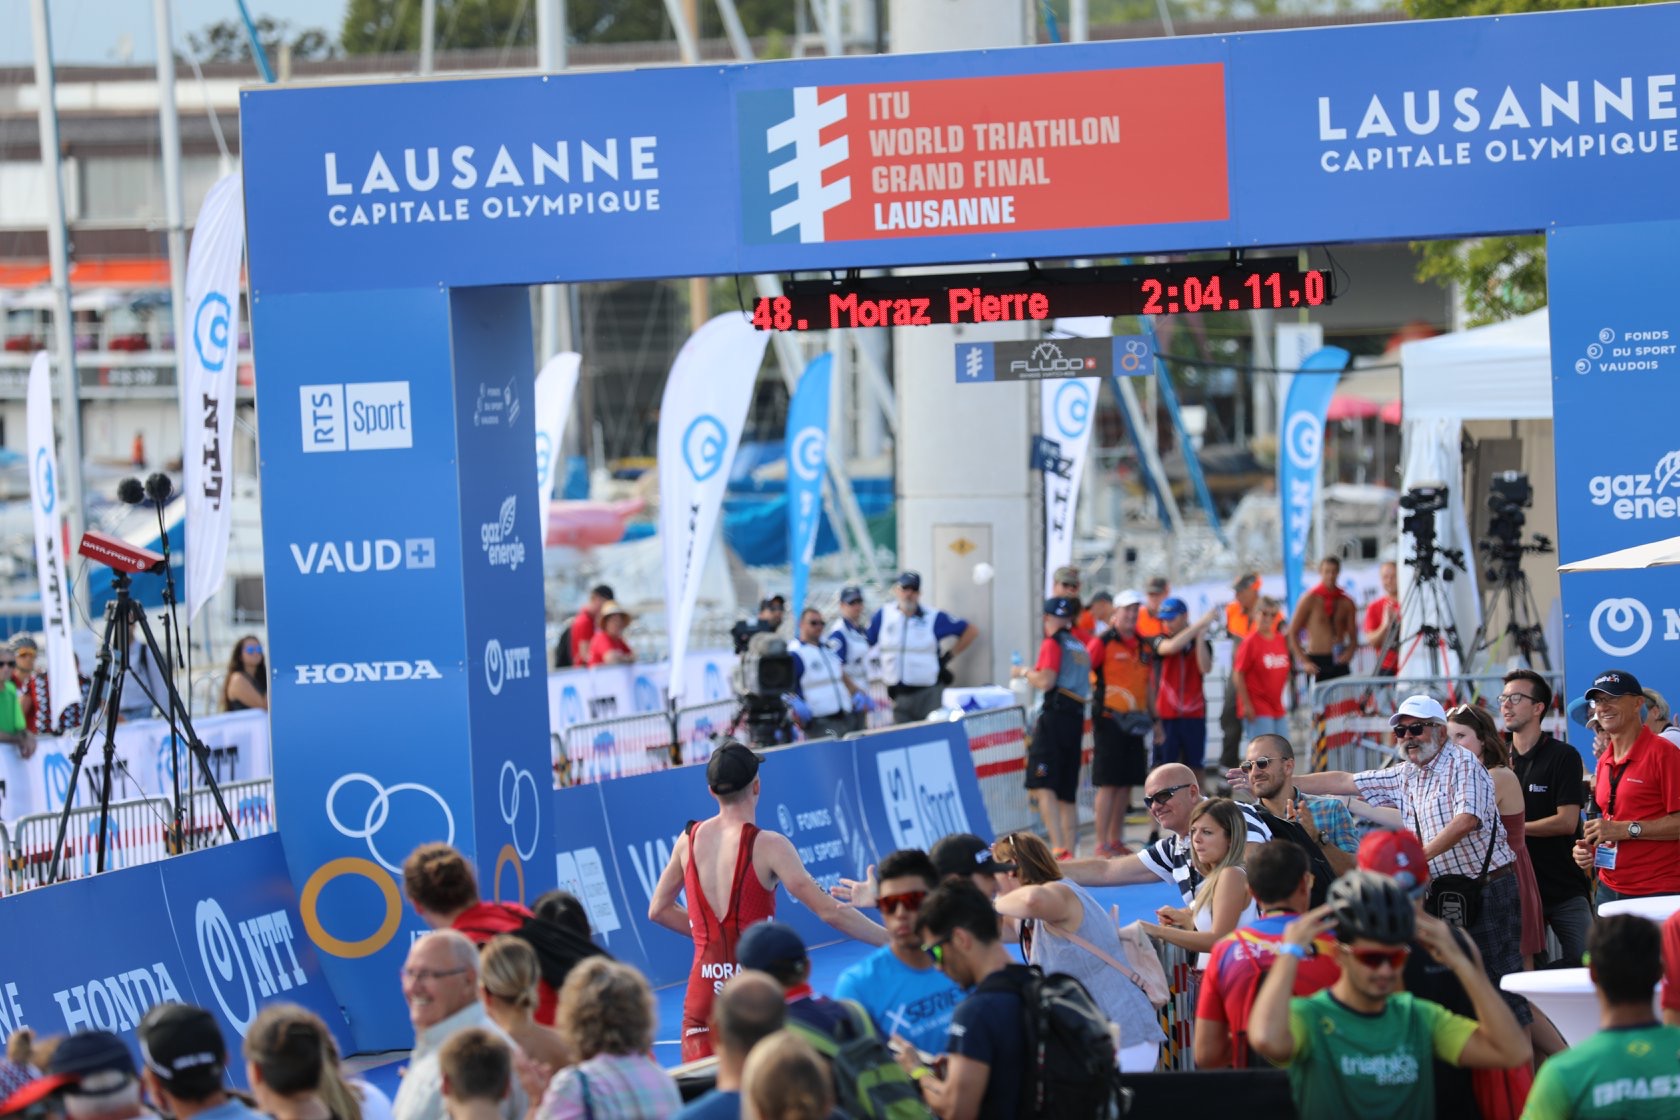 Lausanne ITU World Triathlon Grande Finale